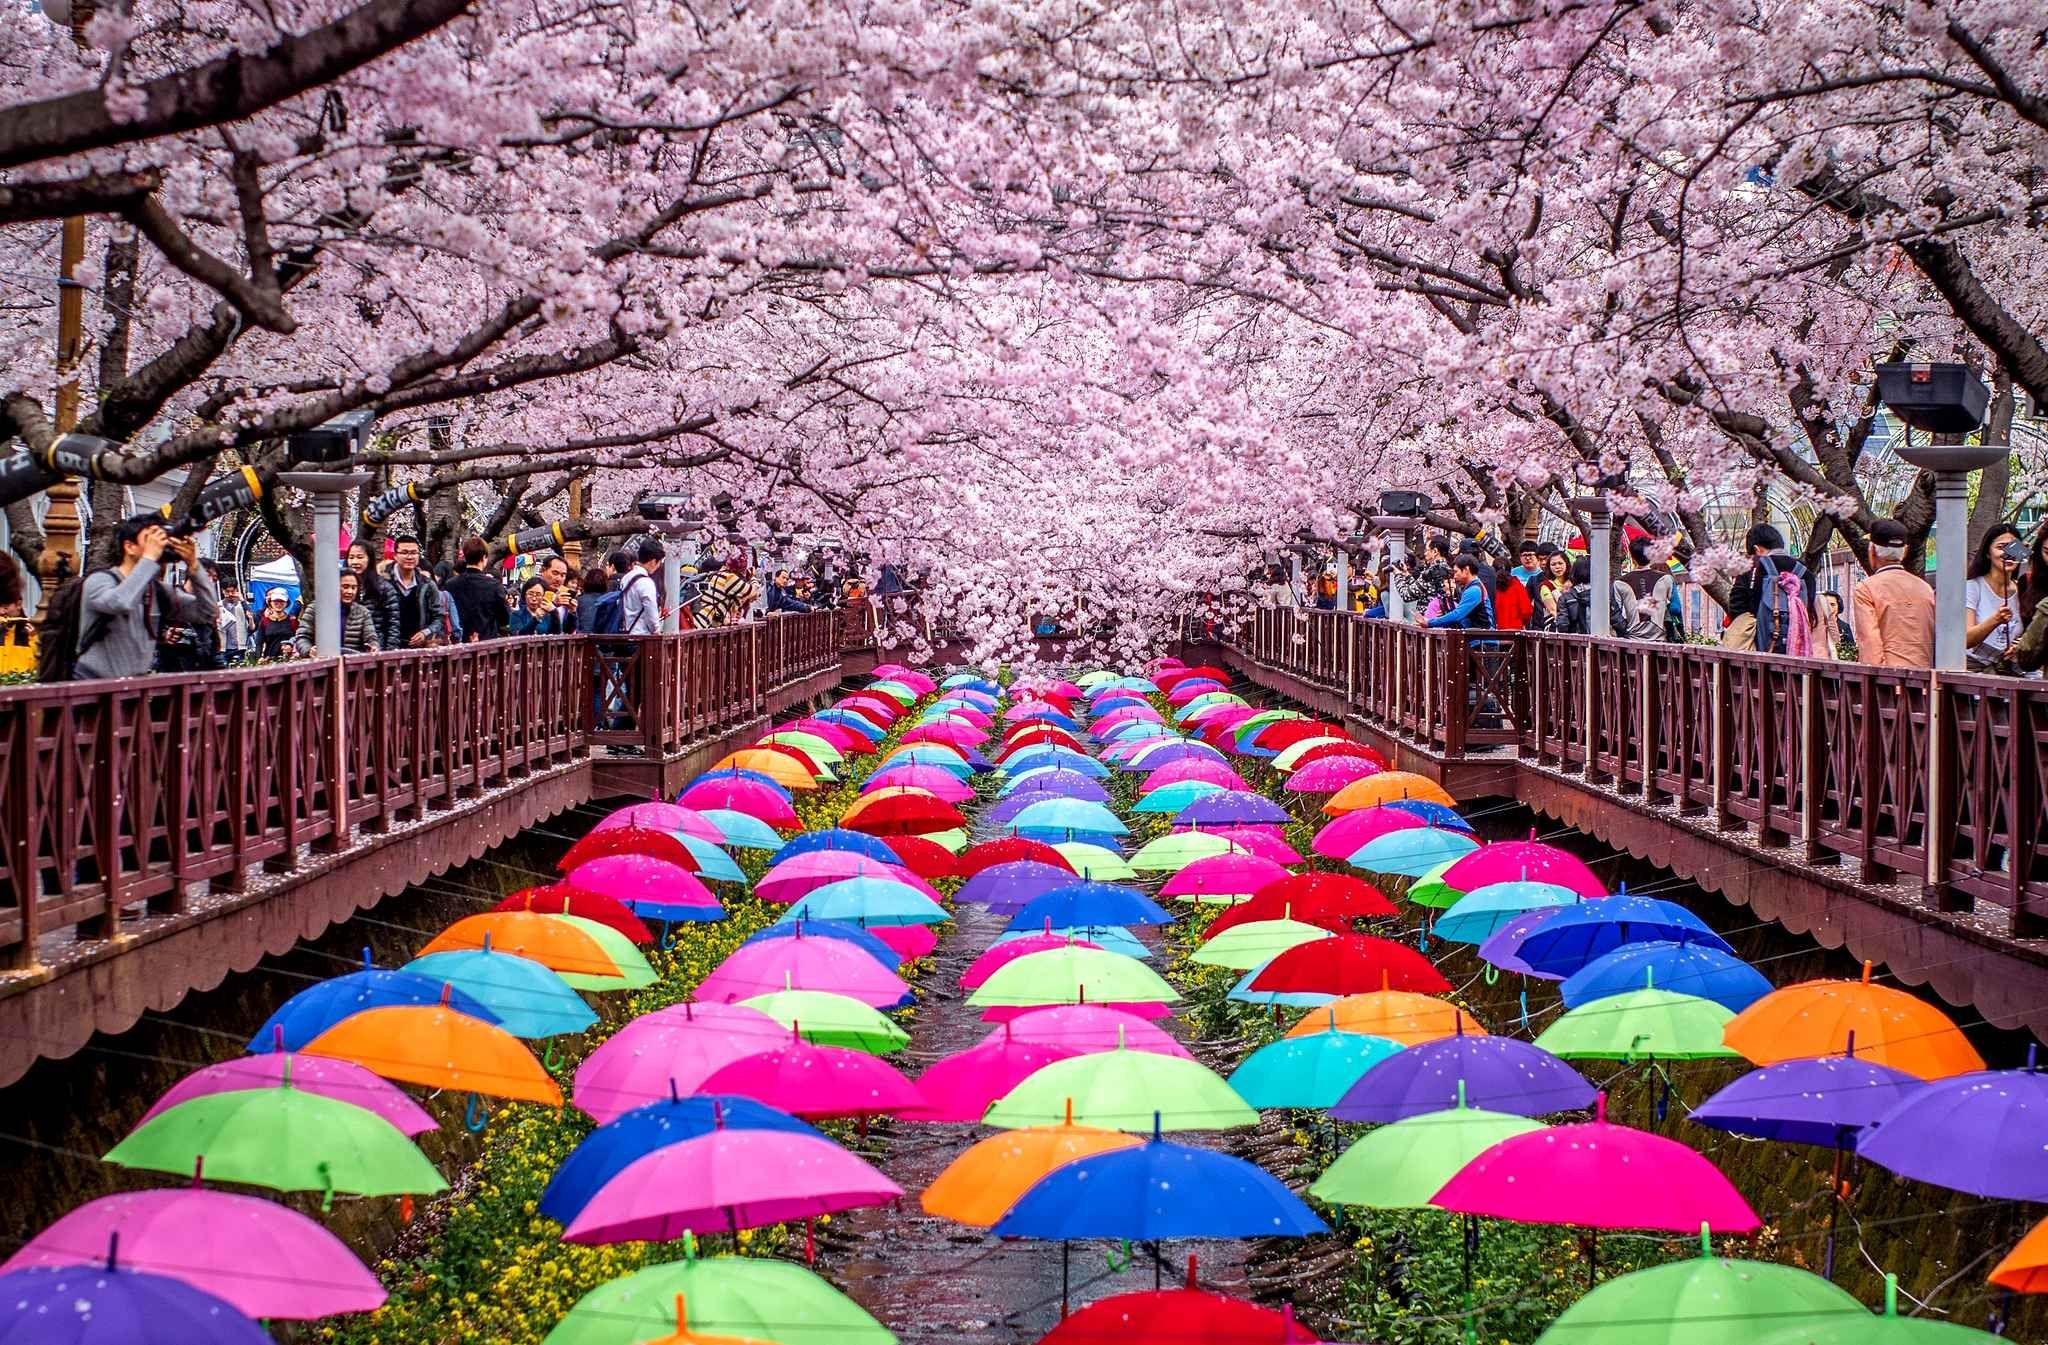 South japan. Корея черри блоссом. Сеул Южная Корея Сакура. Сеул Южная Корея цветение Сакуры. Цветение Сакуры в Корее.